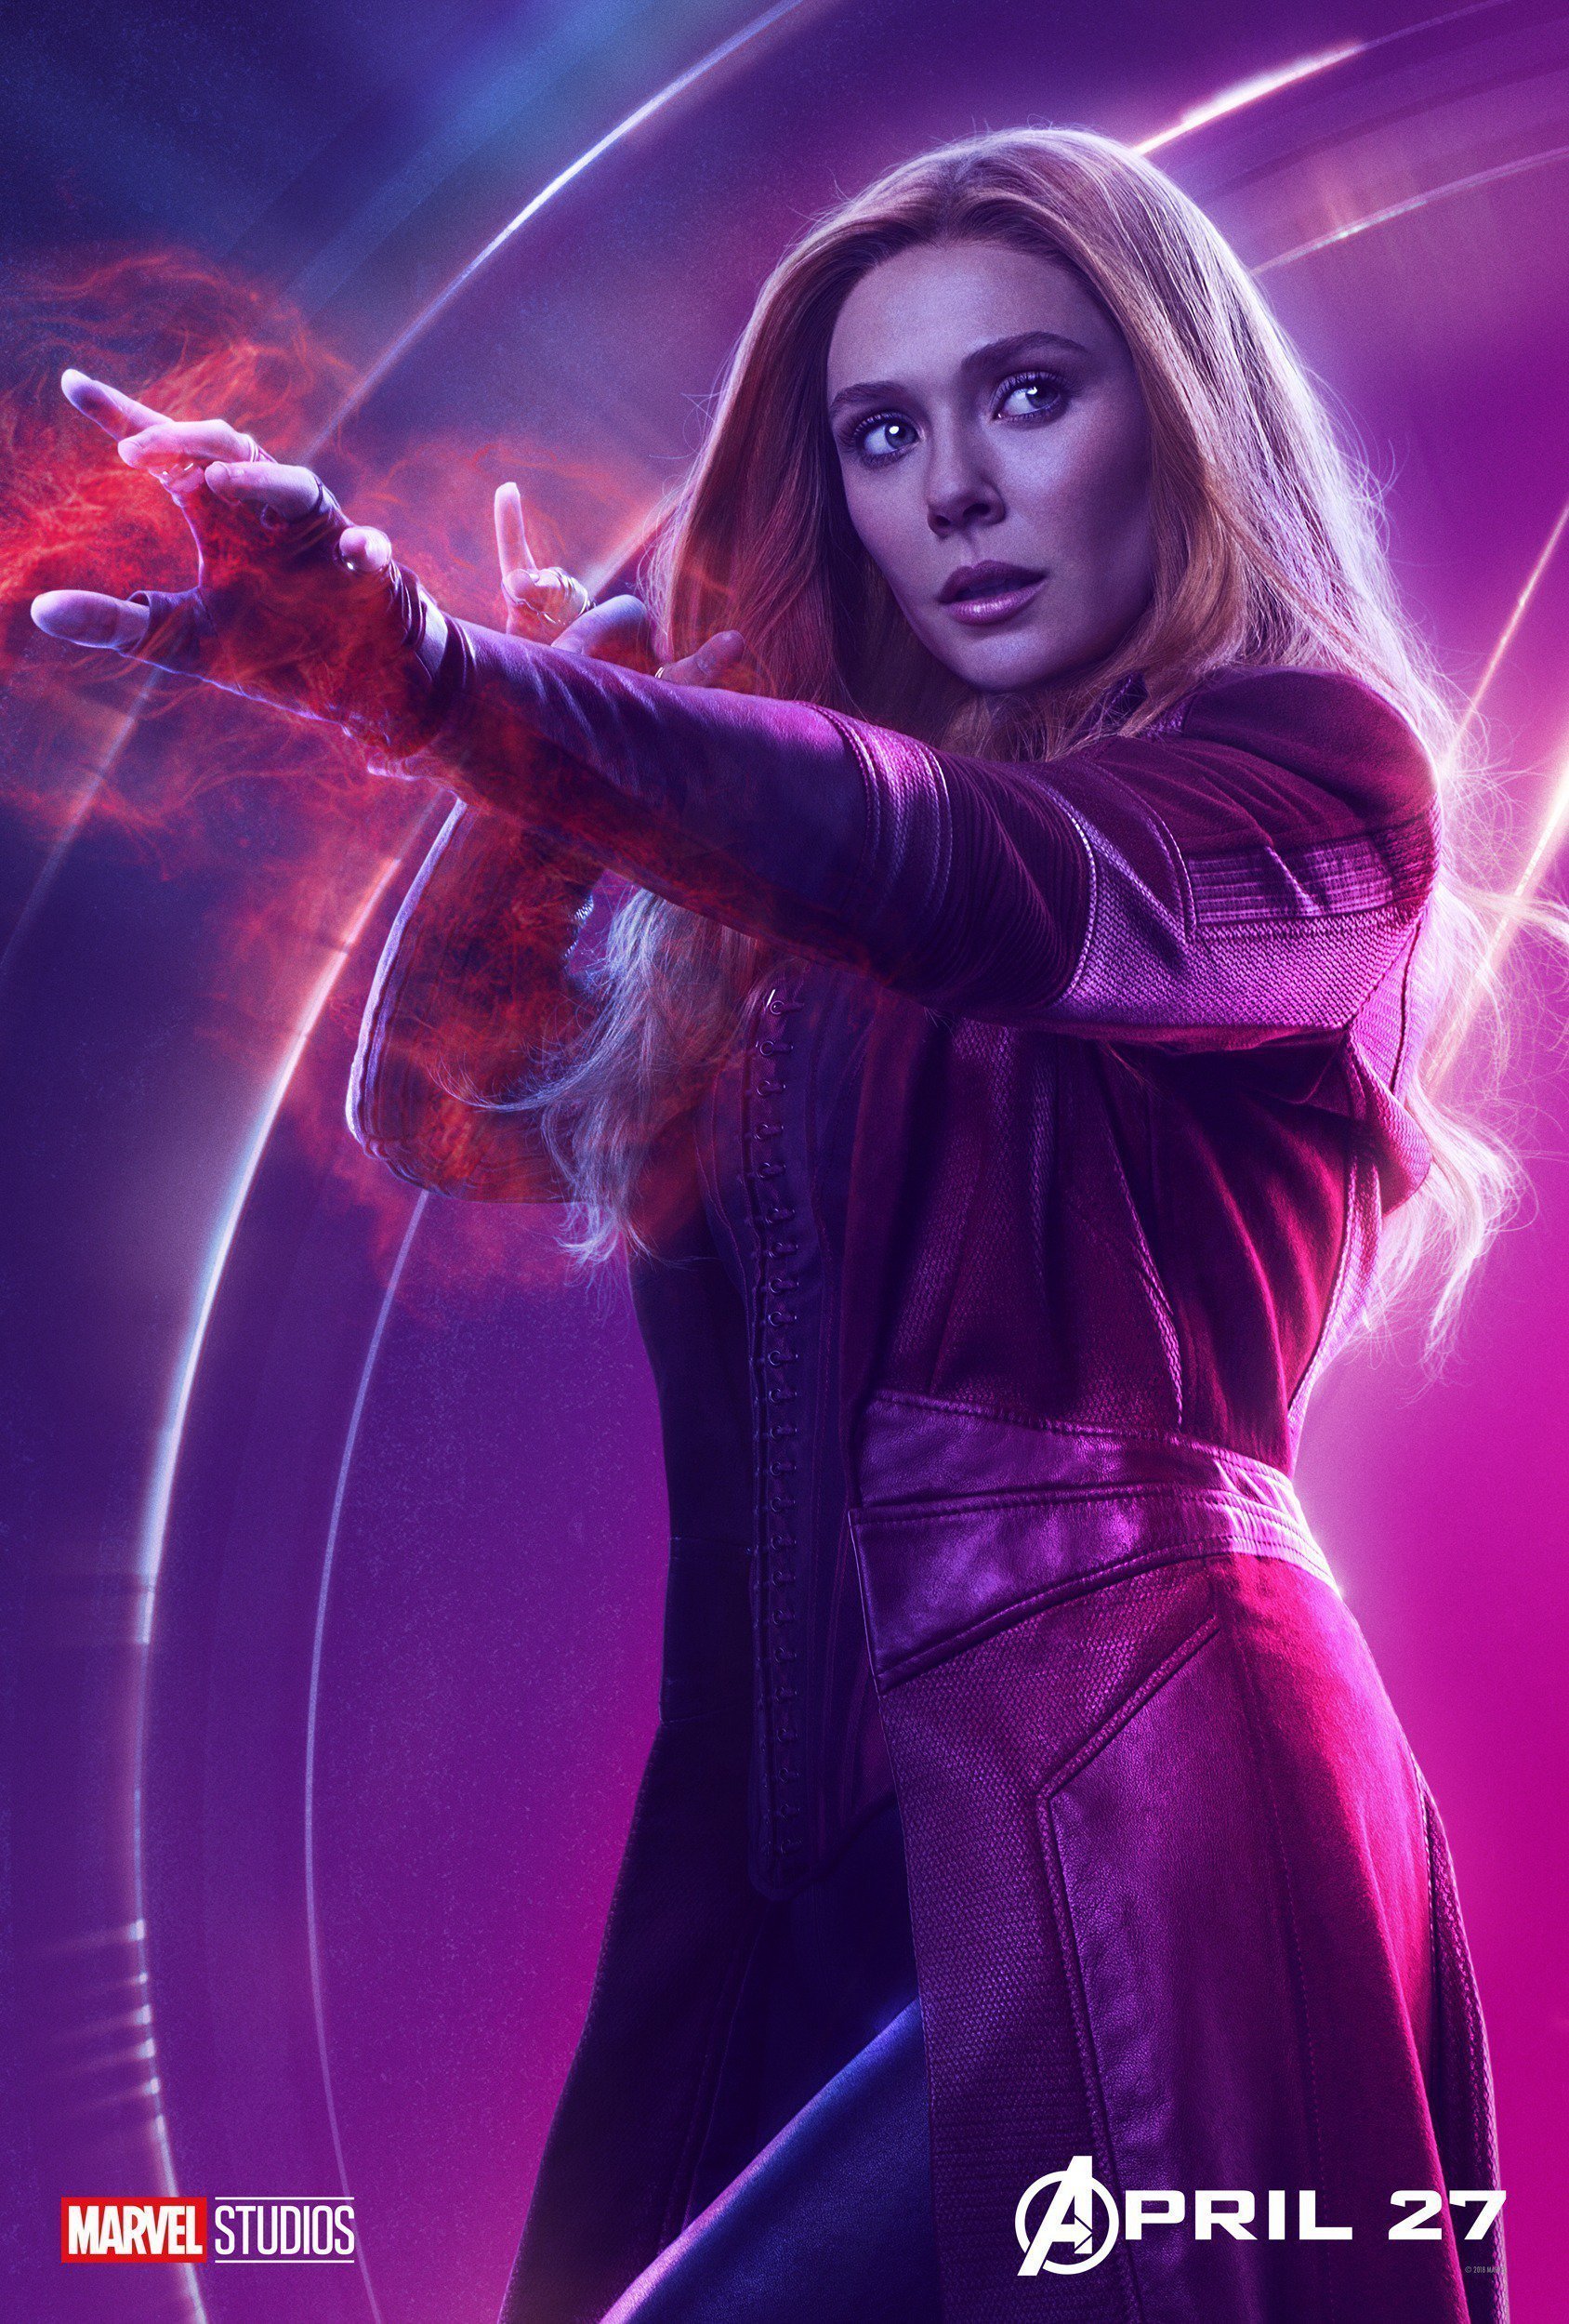 Poster du film Avengers: Infinity War avec Scarlet Witch (Elizabeth Olsen)